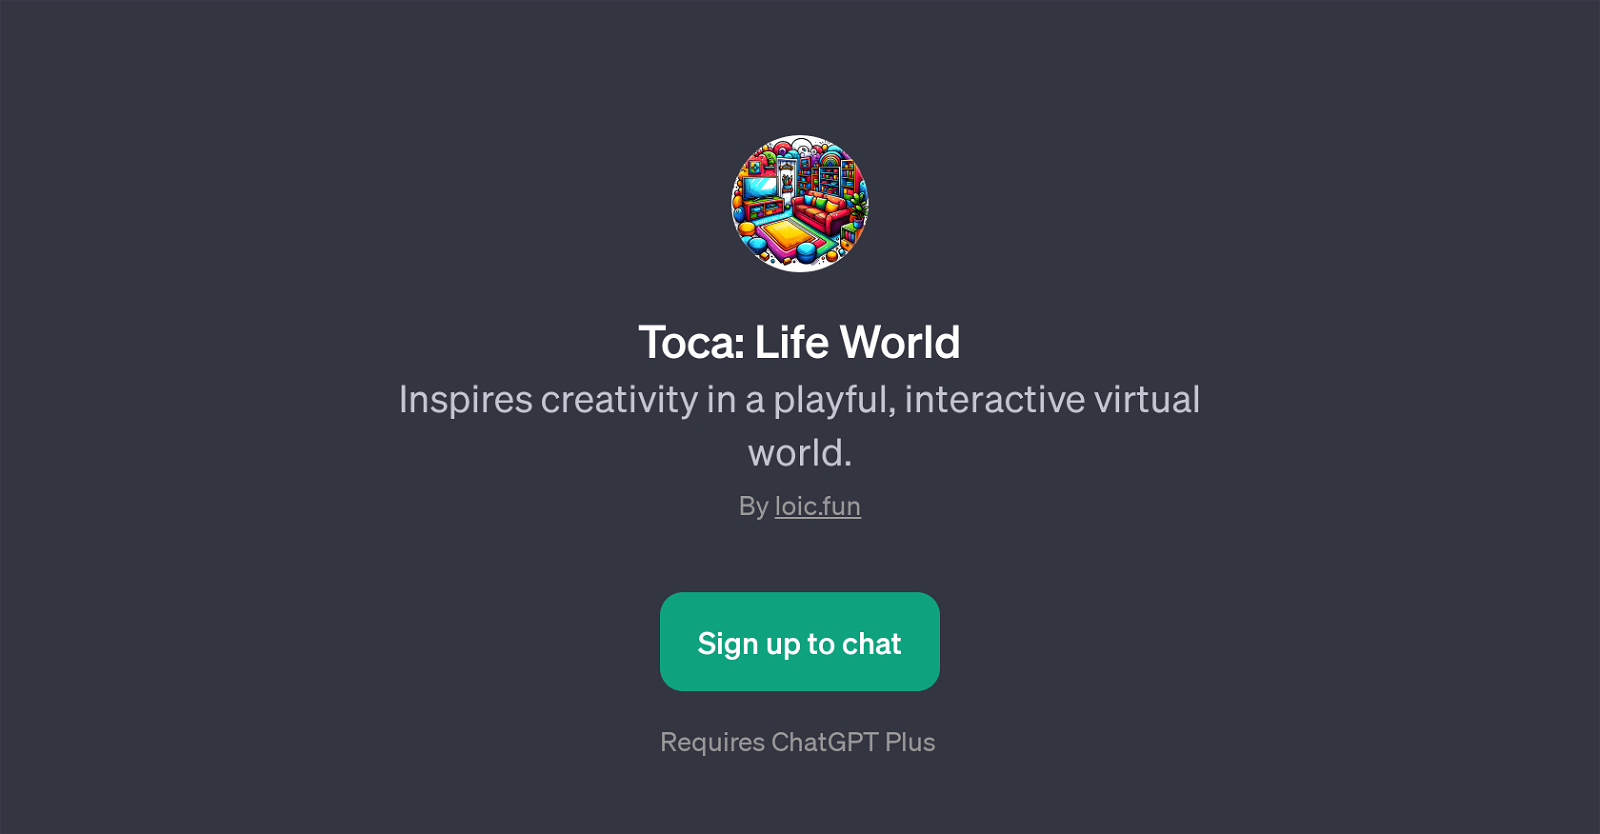 Toca: Life World website